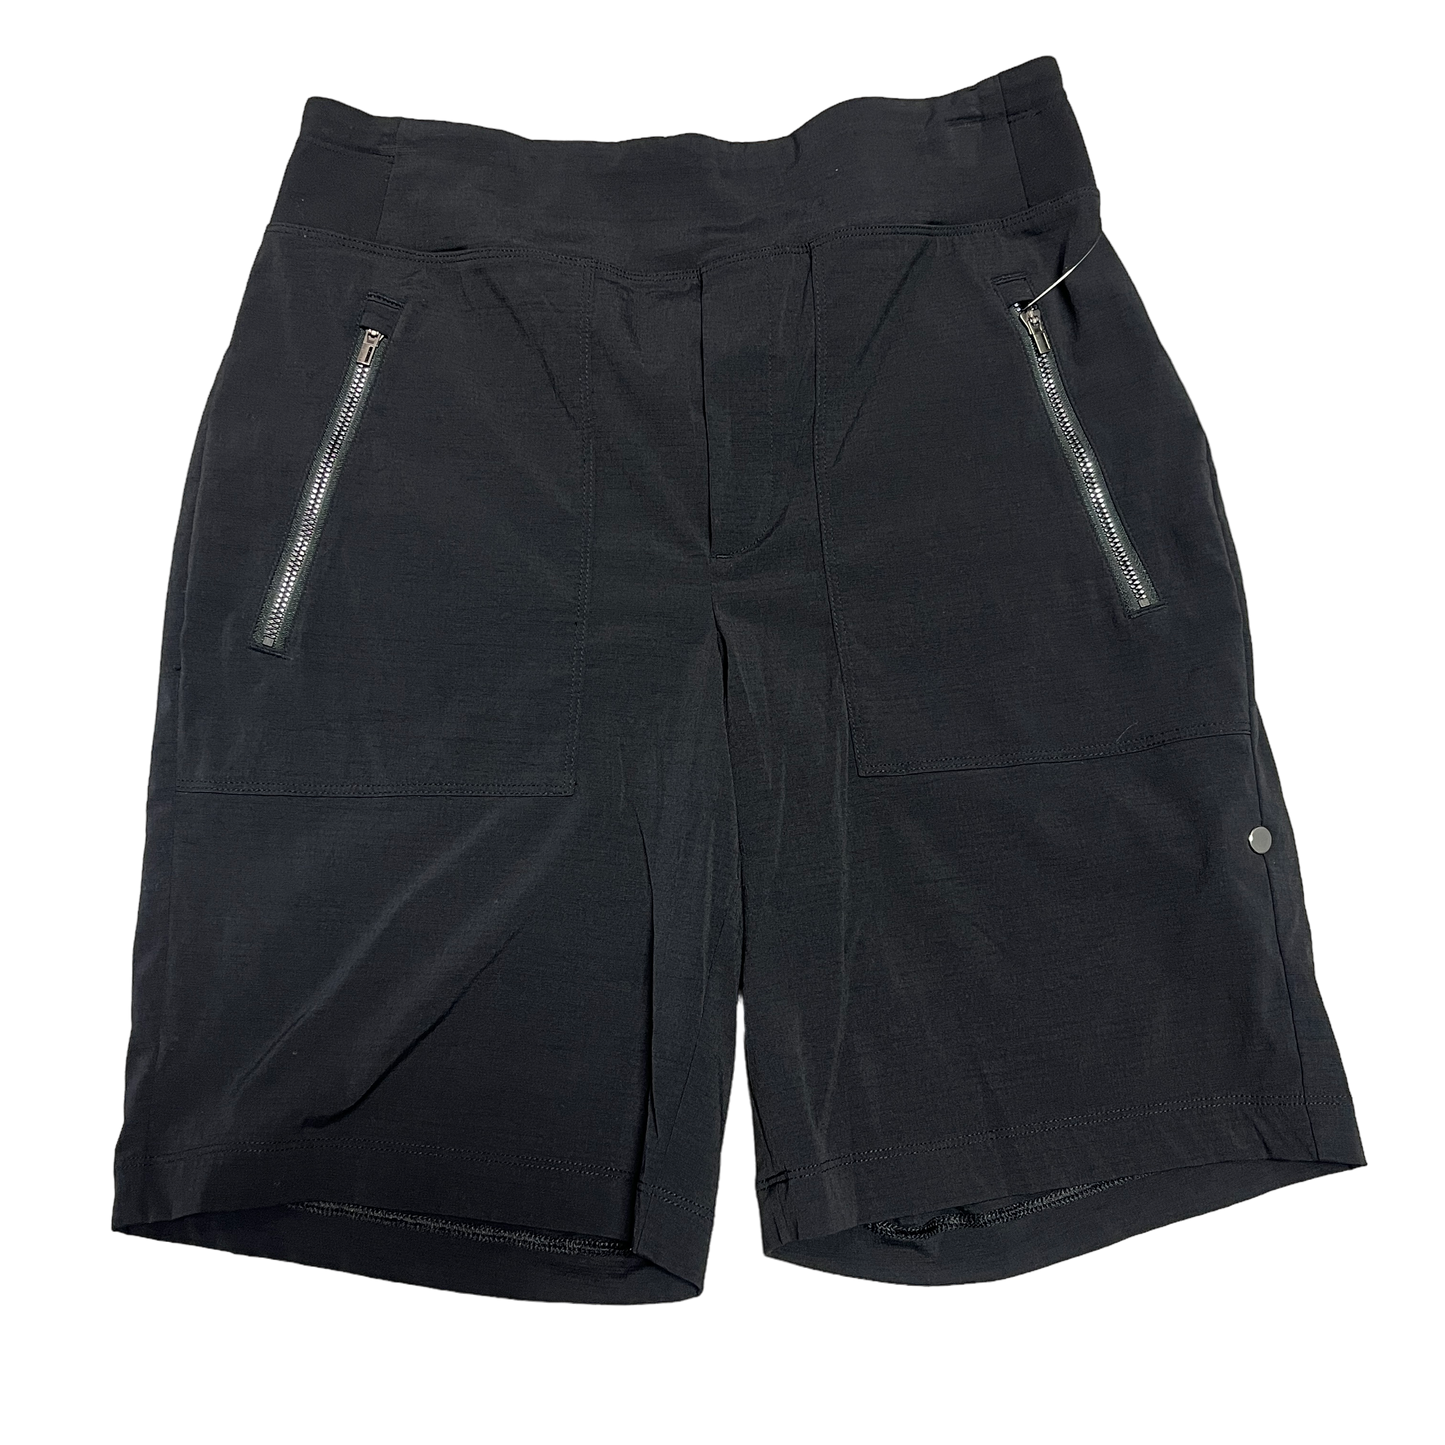 Athletic Shorts By Athleta  Size: 2